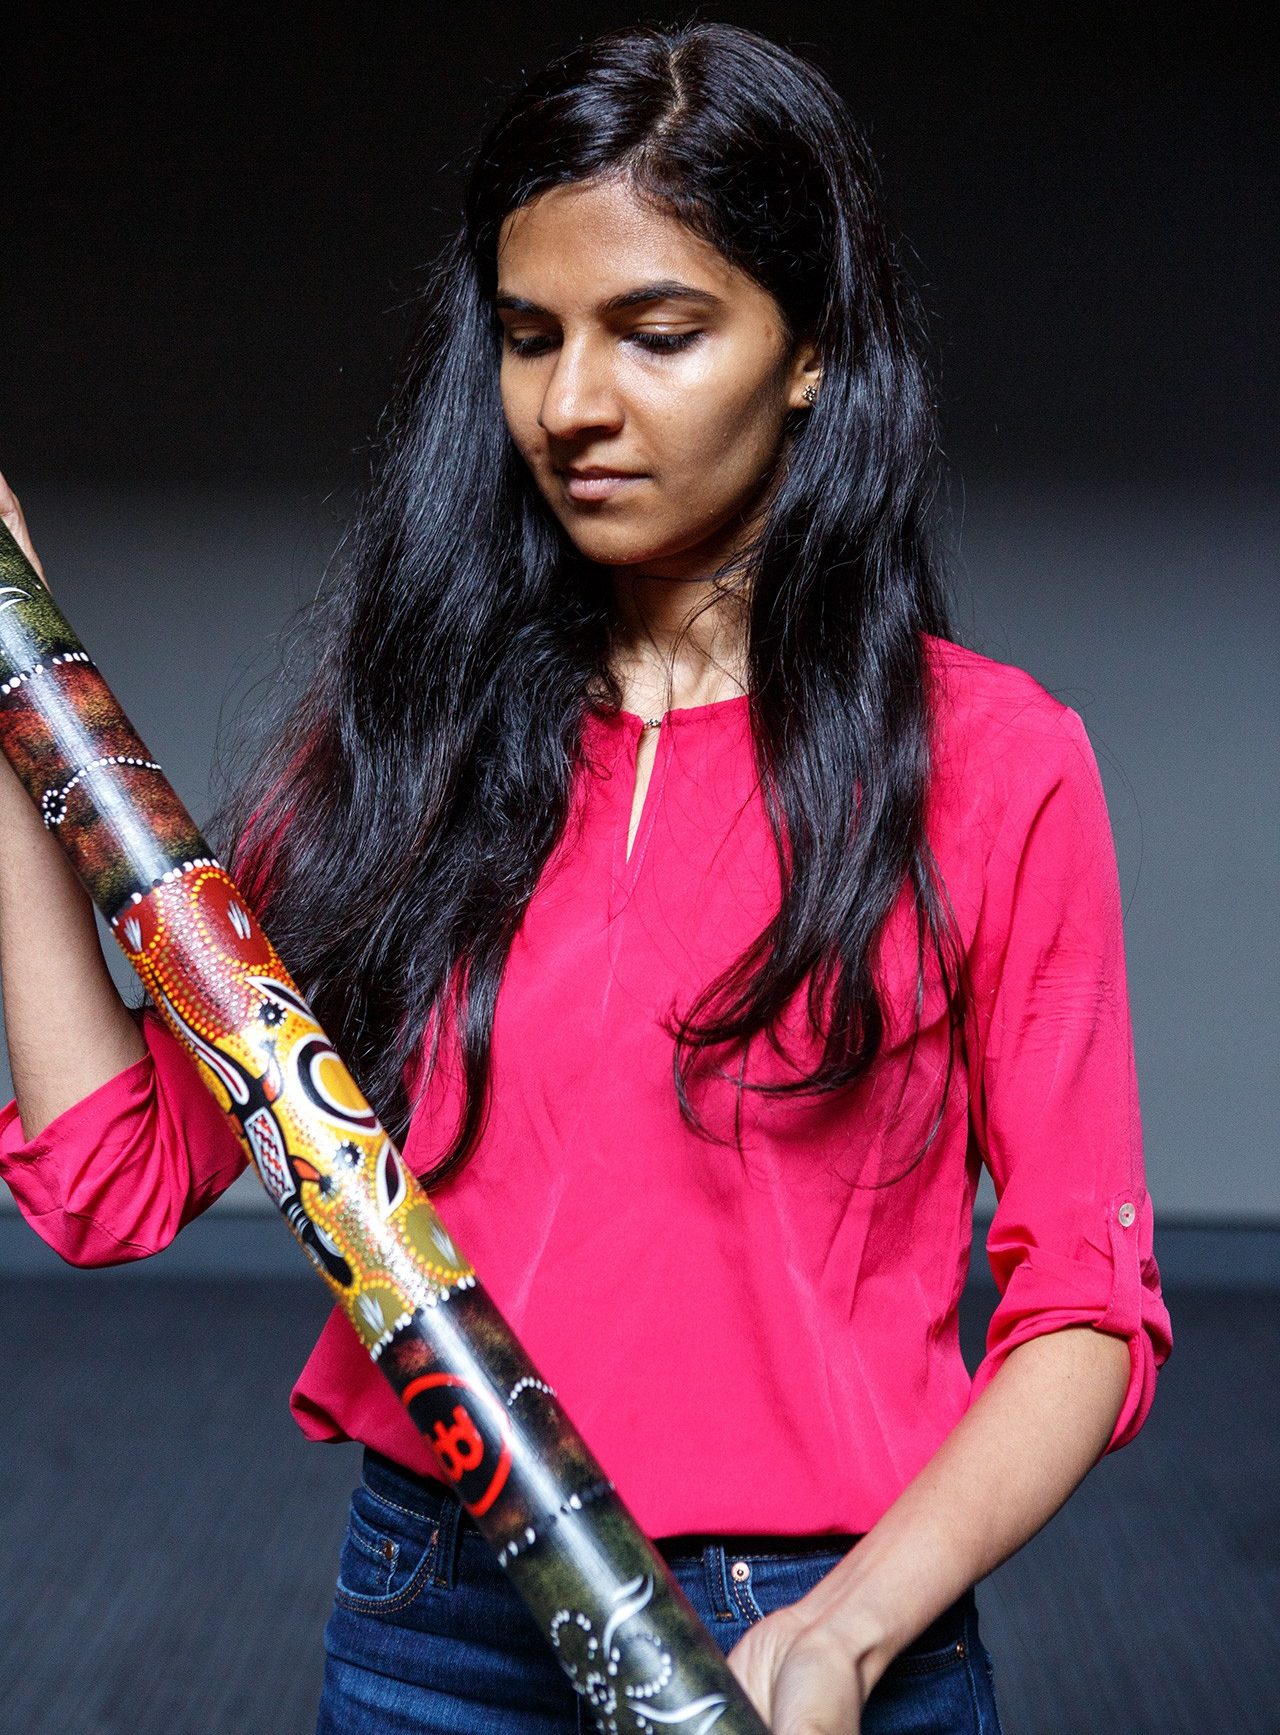 Female student holding a didgeridoo, an Australian indigenous instrument